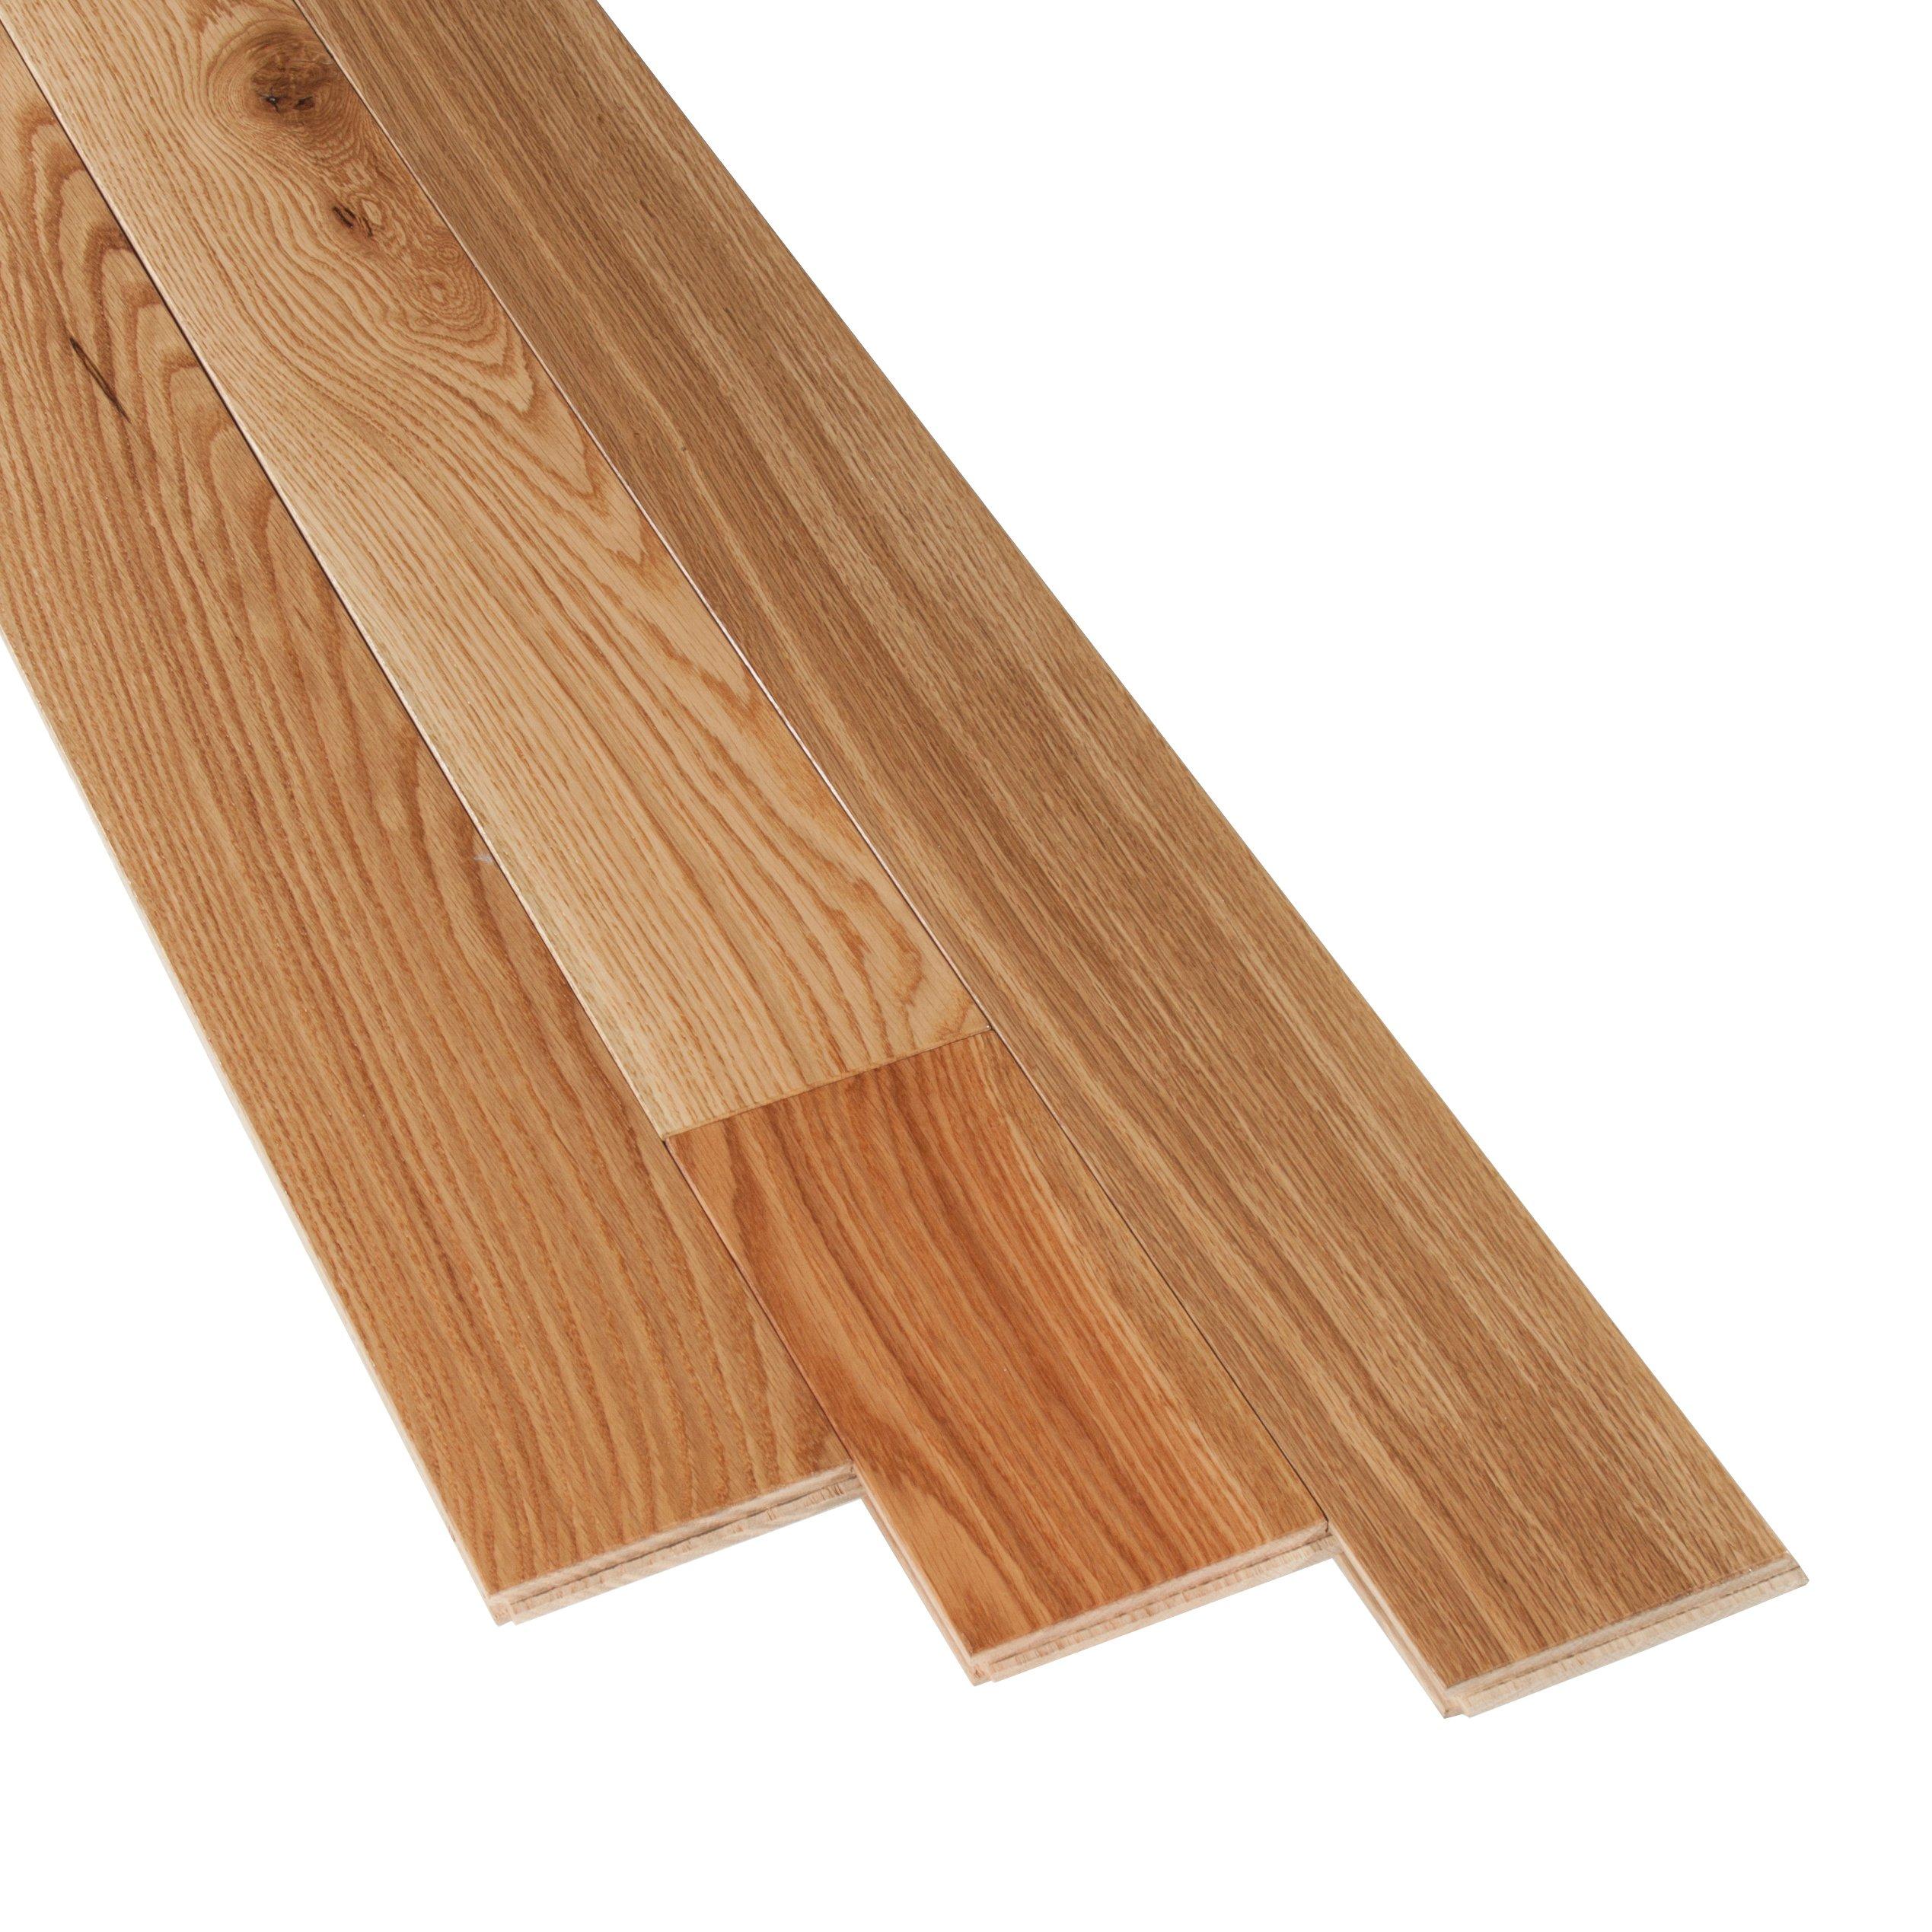 Natural White Oak Smooth Solid Hardwood